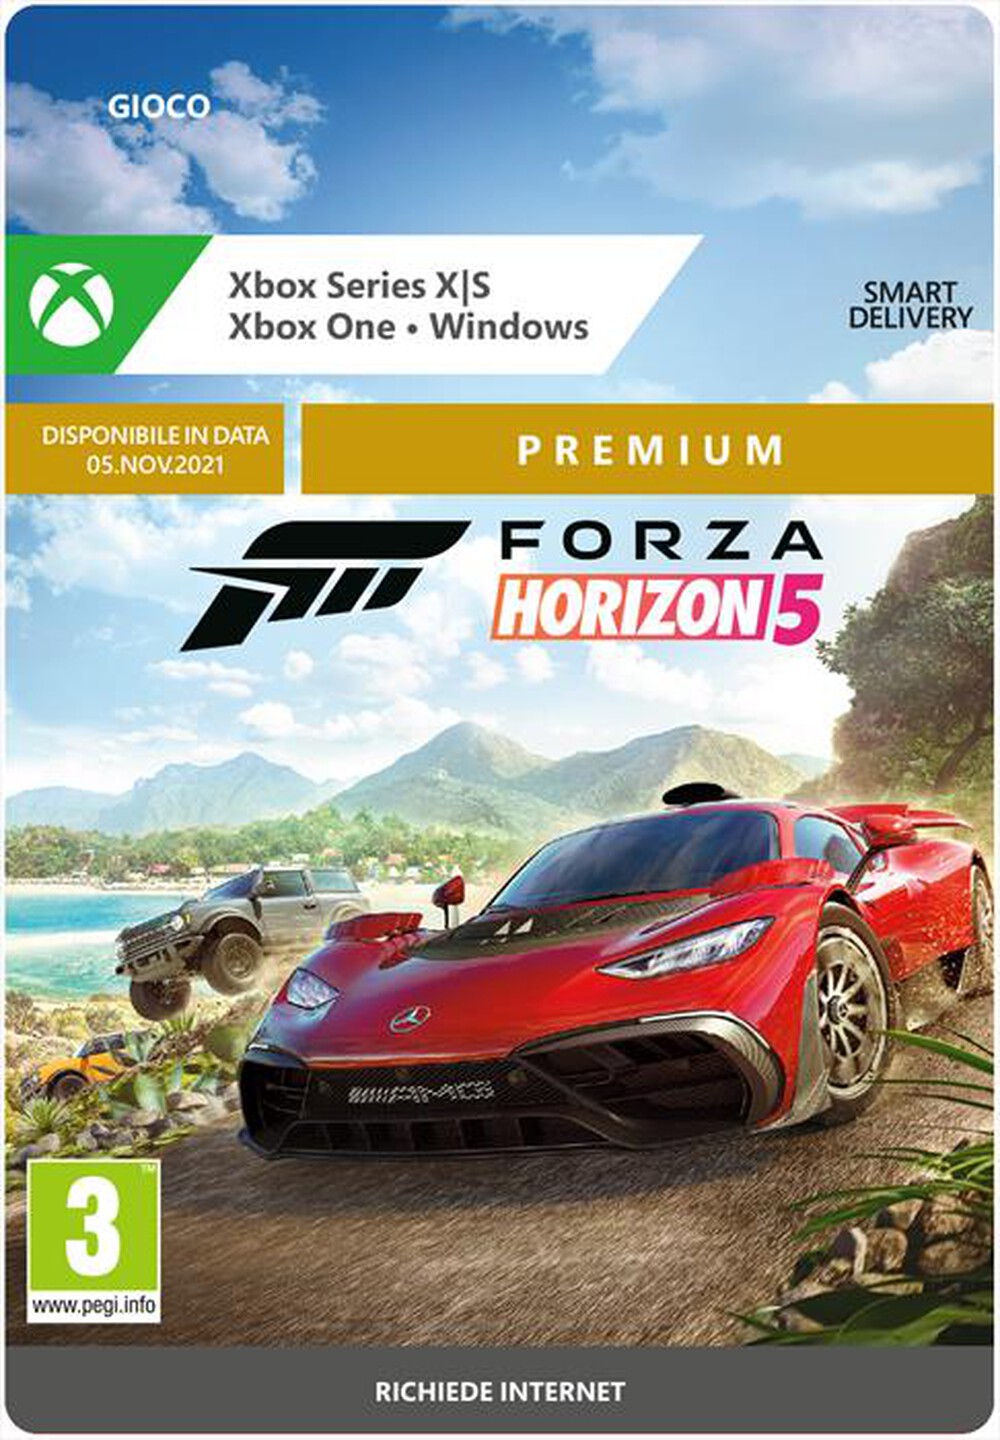 "MICROSOFT - Forza Horizon5 Premium Edition - "